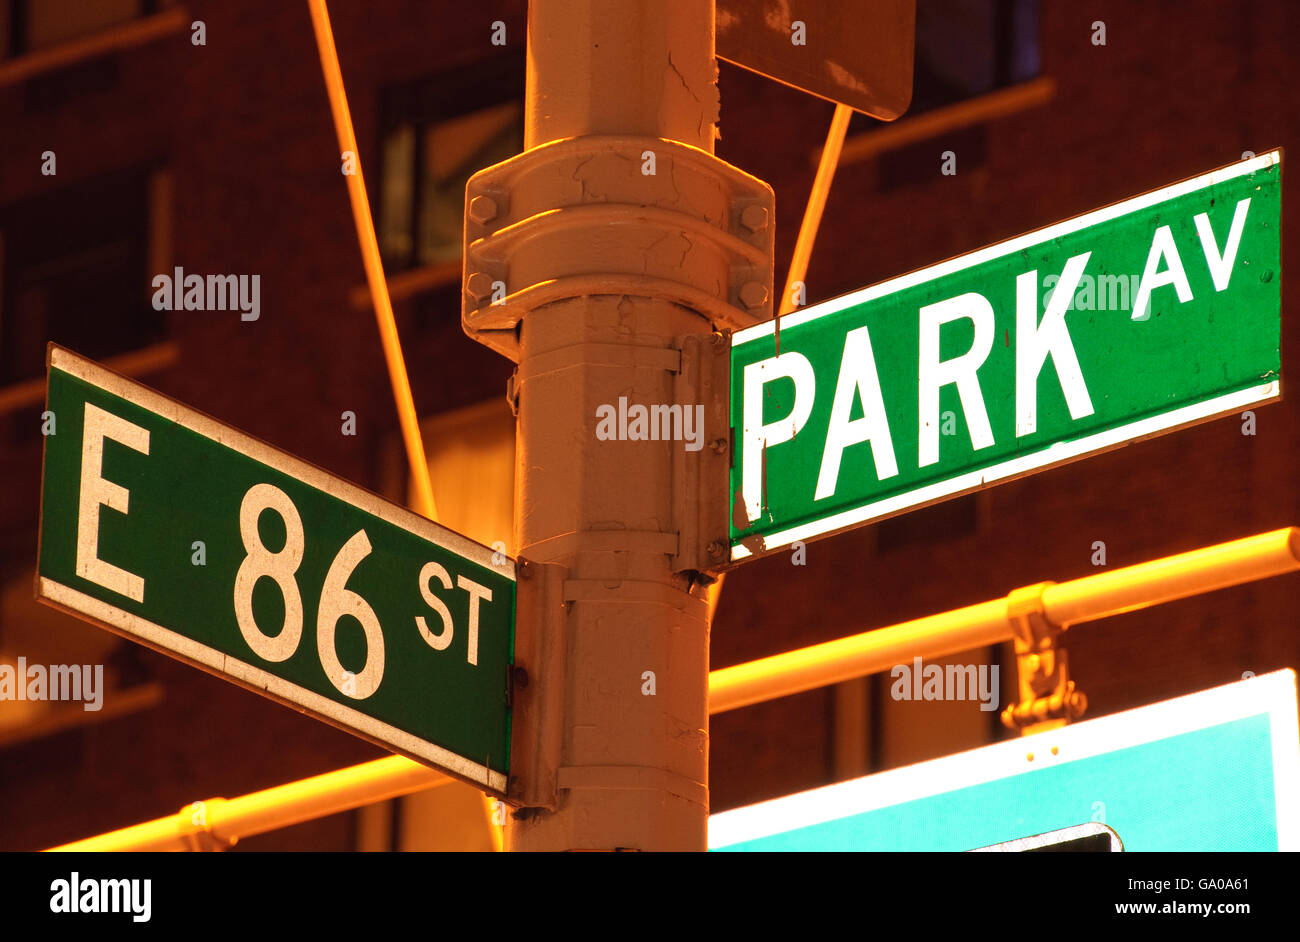 Park Avenue, street sign, New York City, New York, USA Banque D'Images